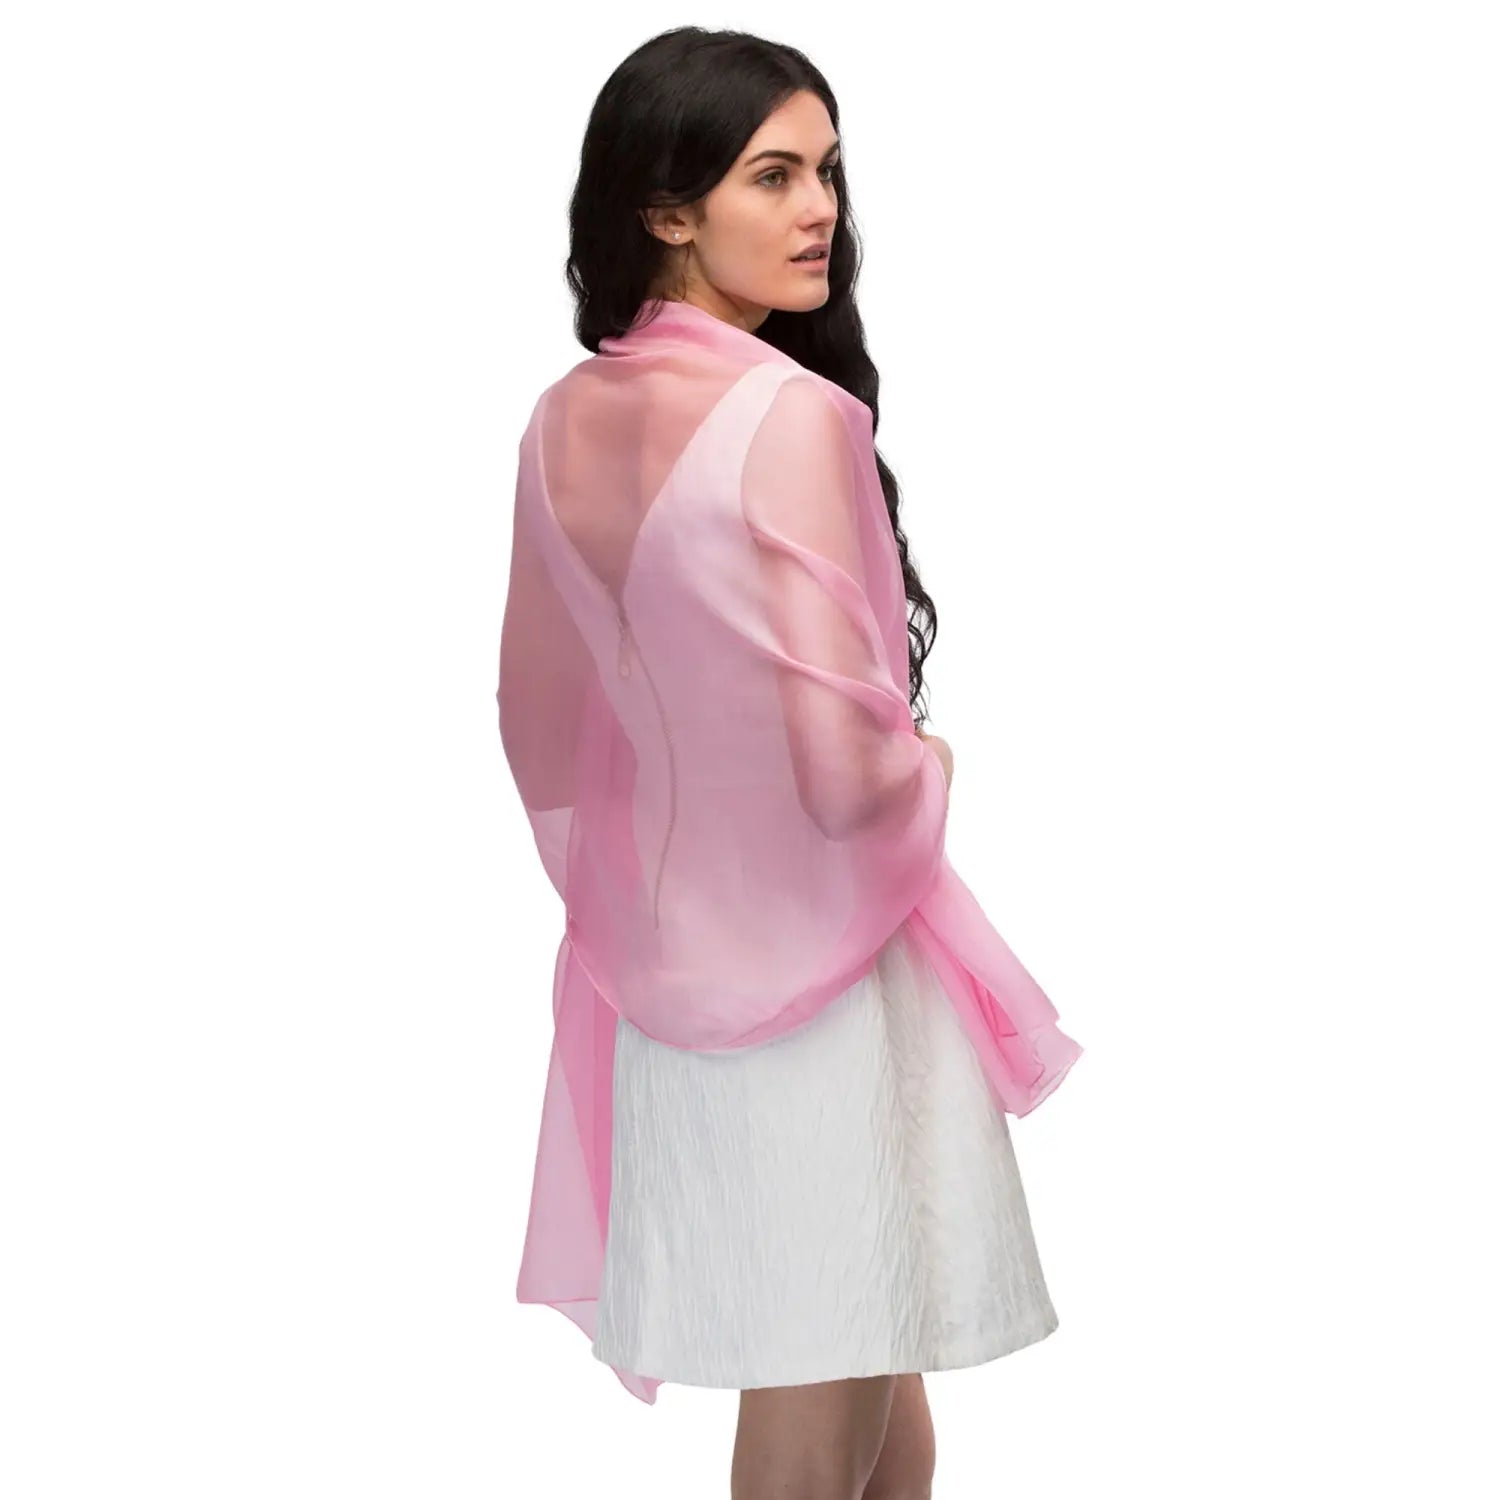 Woman in pink blouse and white skirt wearing Plain Chiffon Shawl Semi-Opaque - Versatile Scarf.